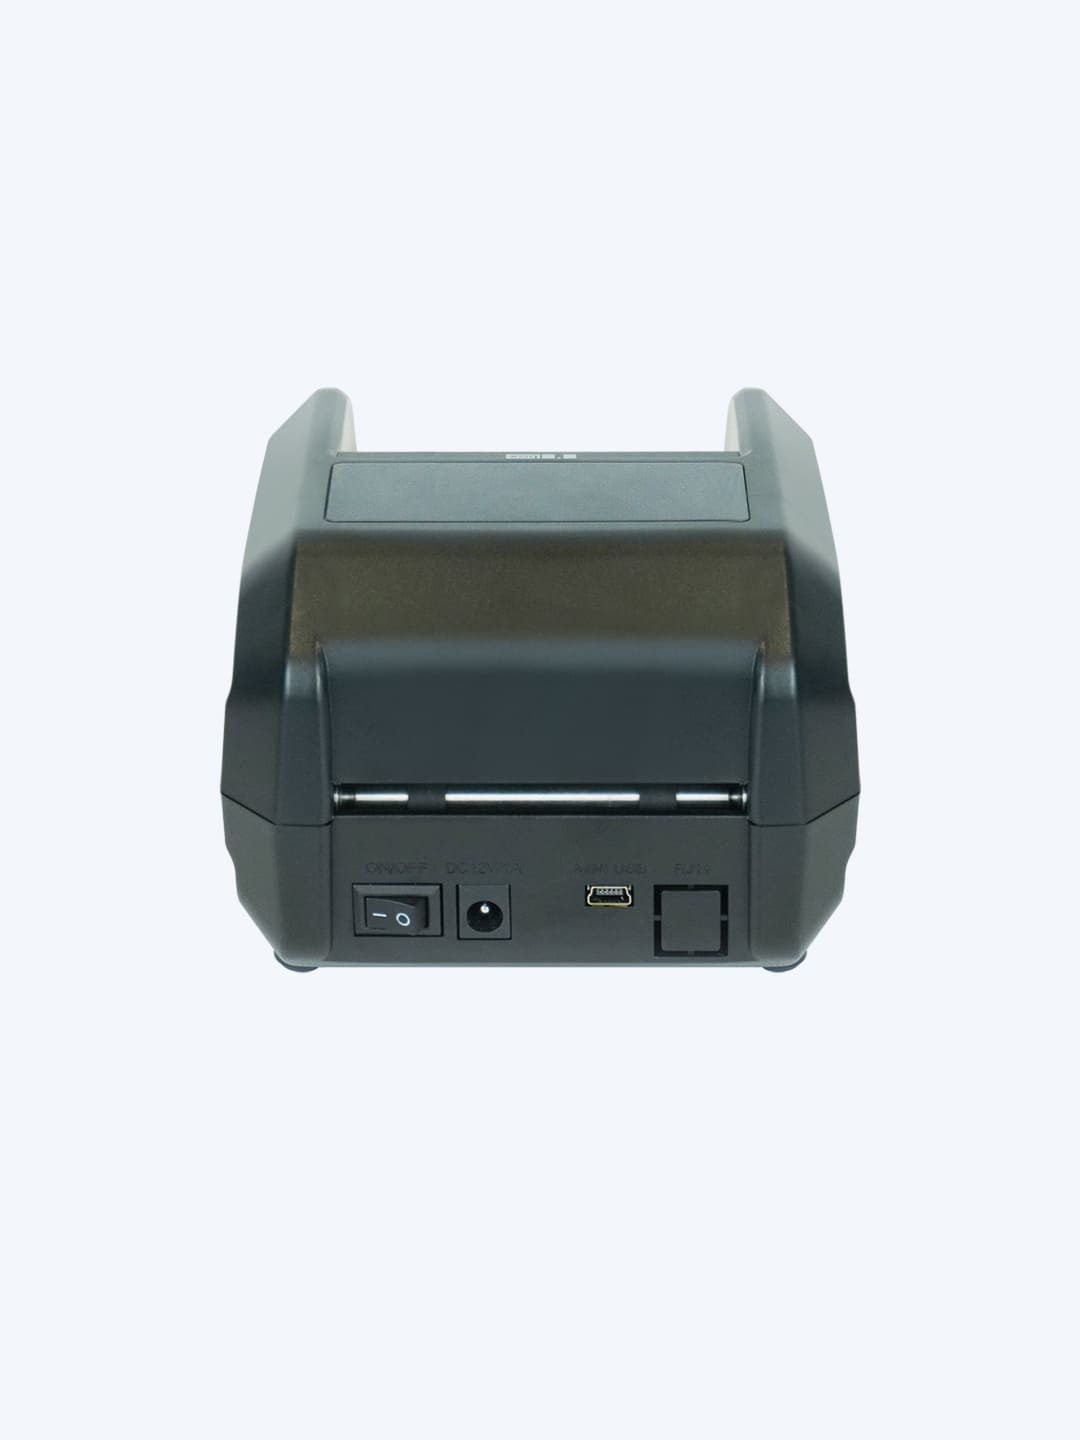 Автоматический детектор валют Mbox AMD-10S